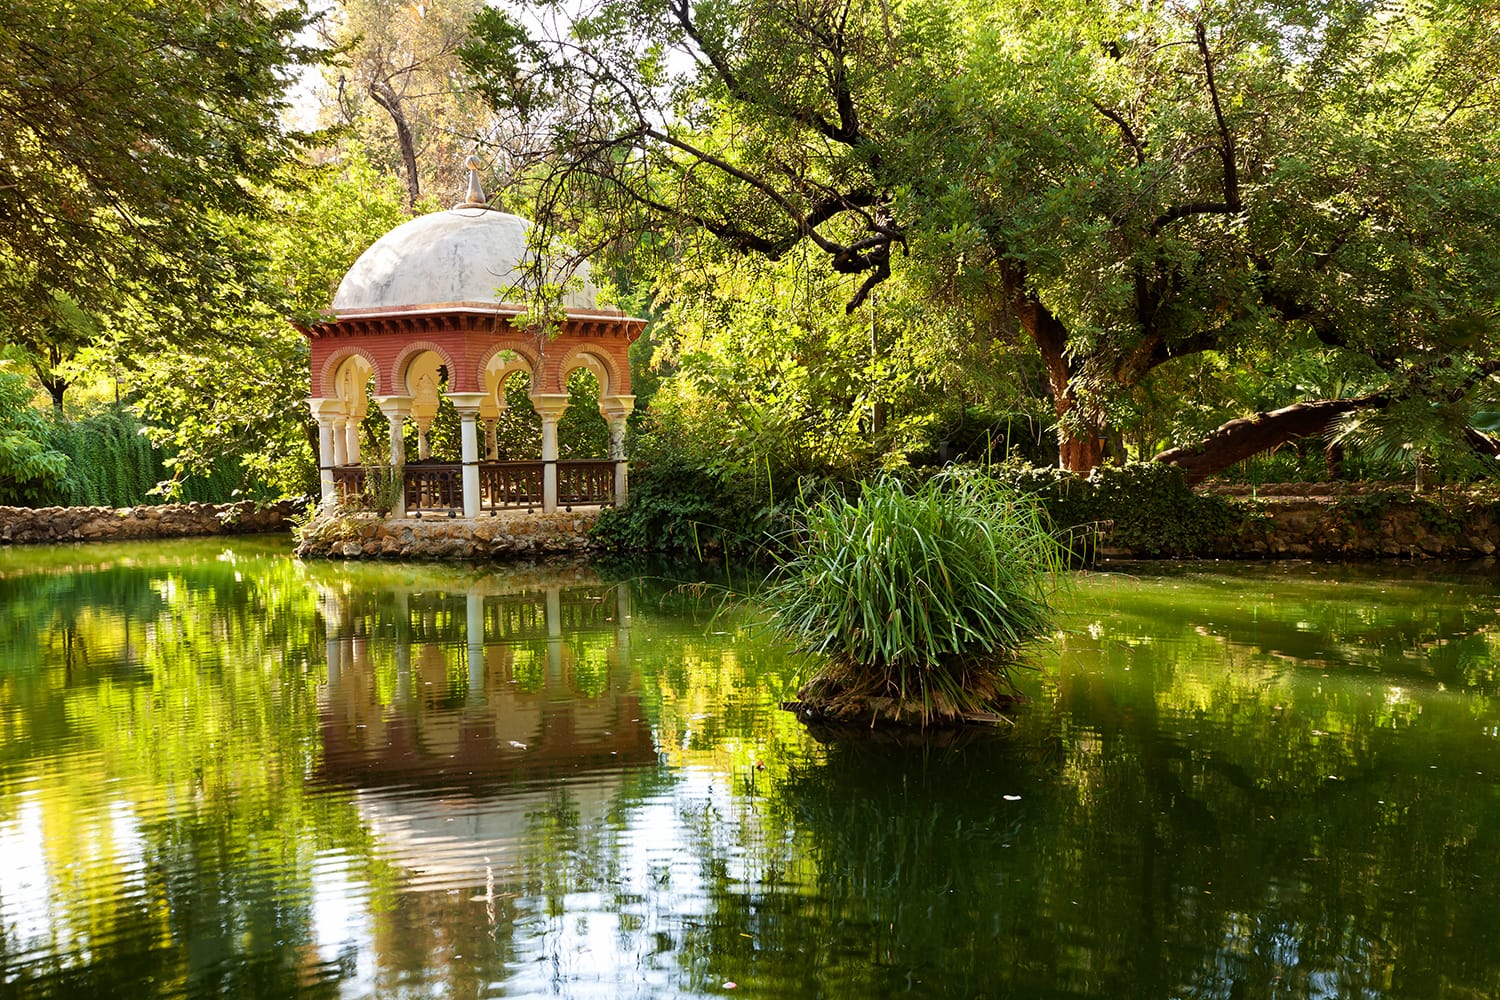 Romantic pavilion reflected in a pond. Parque Maria Luisa of Sevilla, Spain